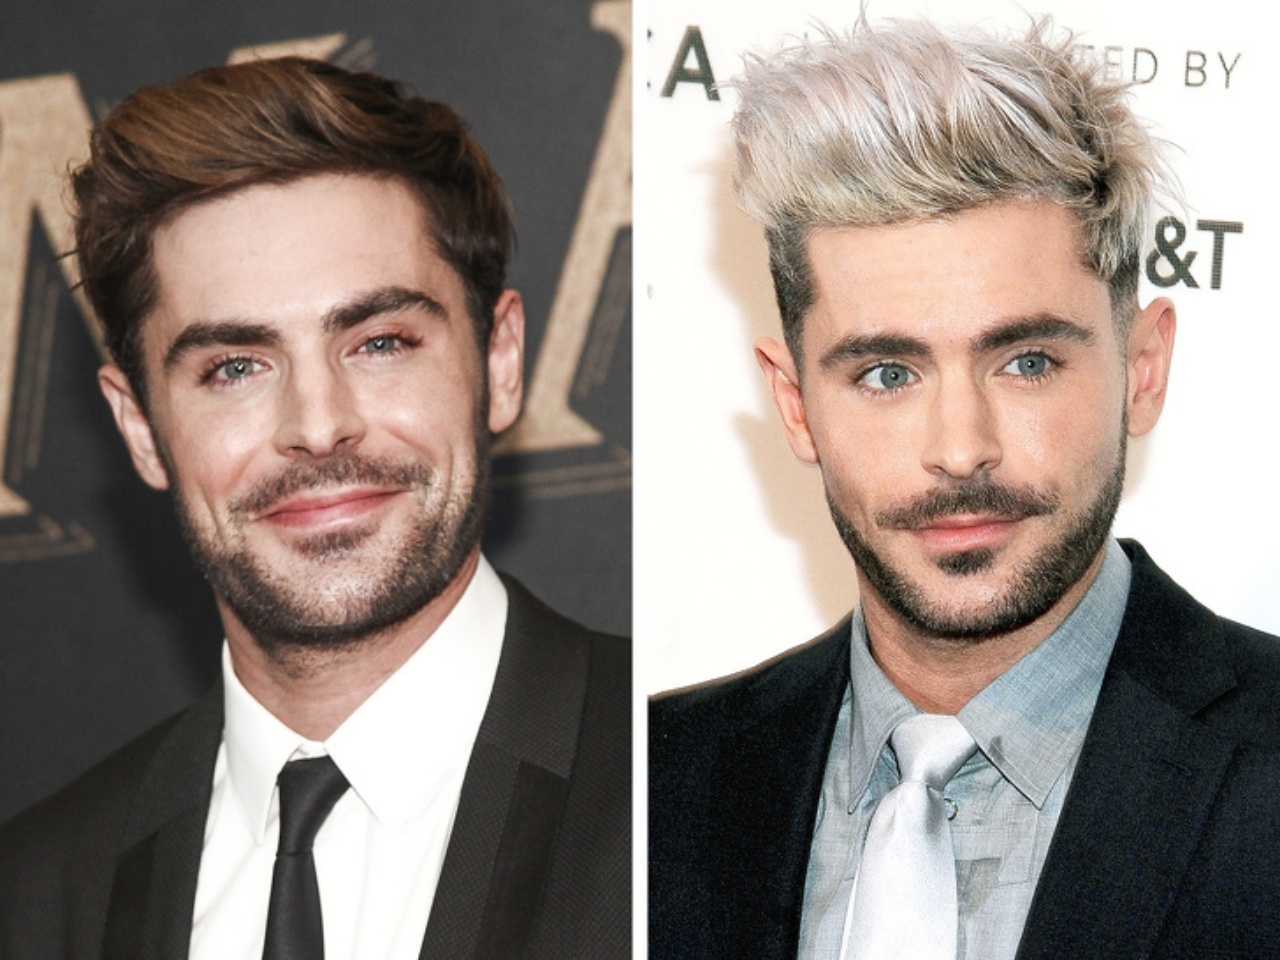 Amazing transformations of Celebrities